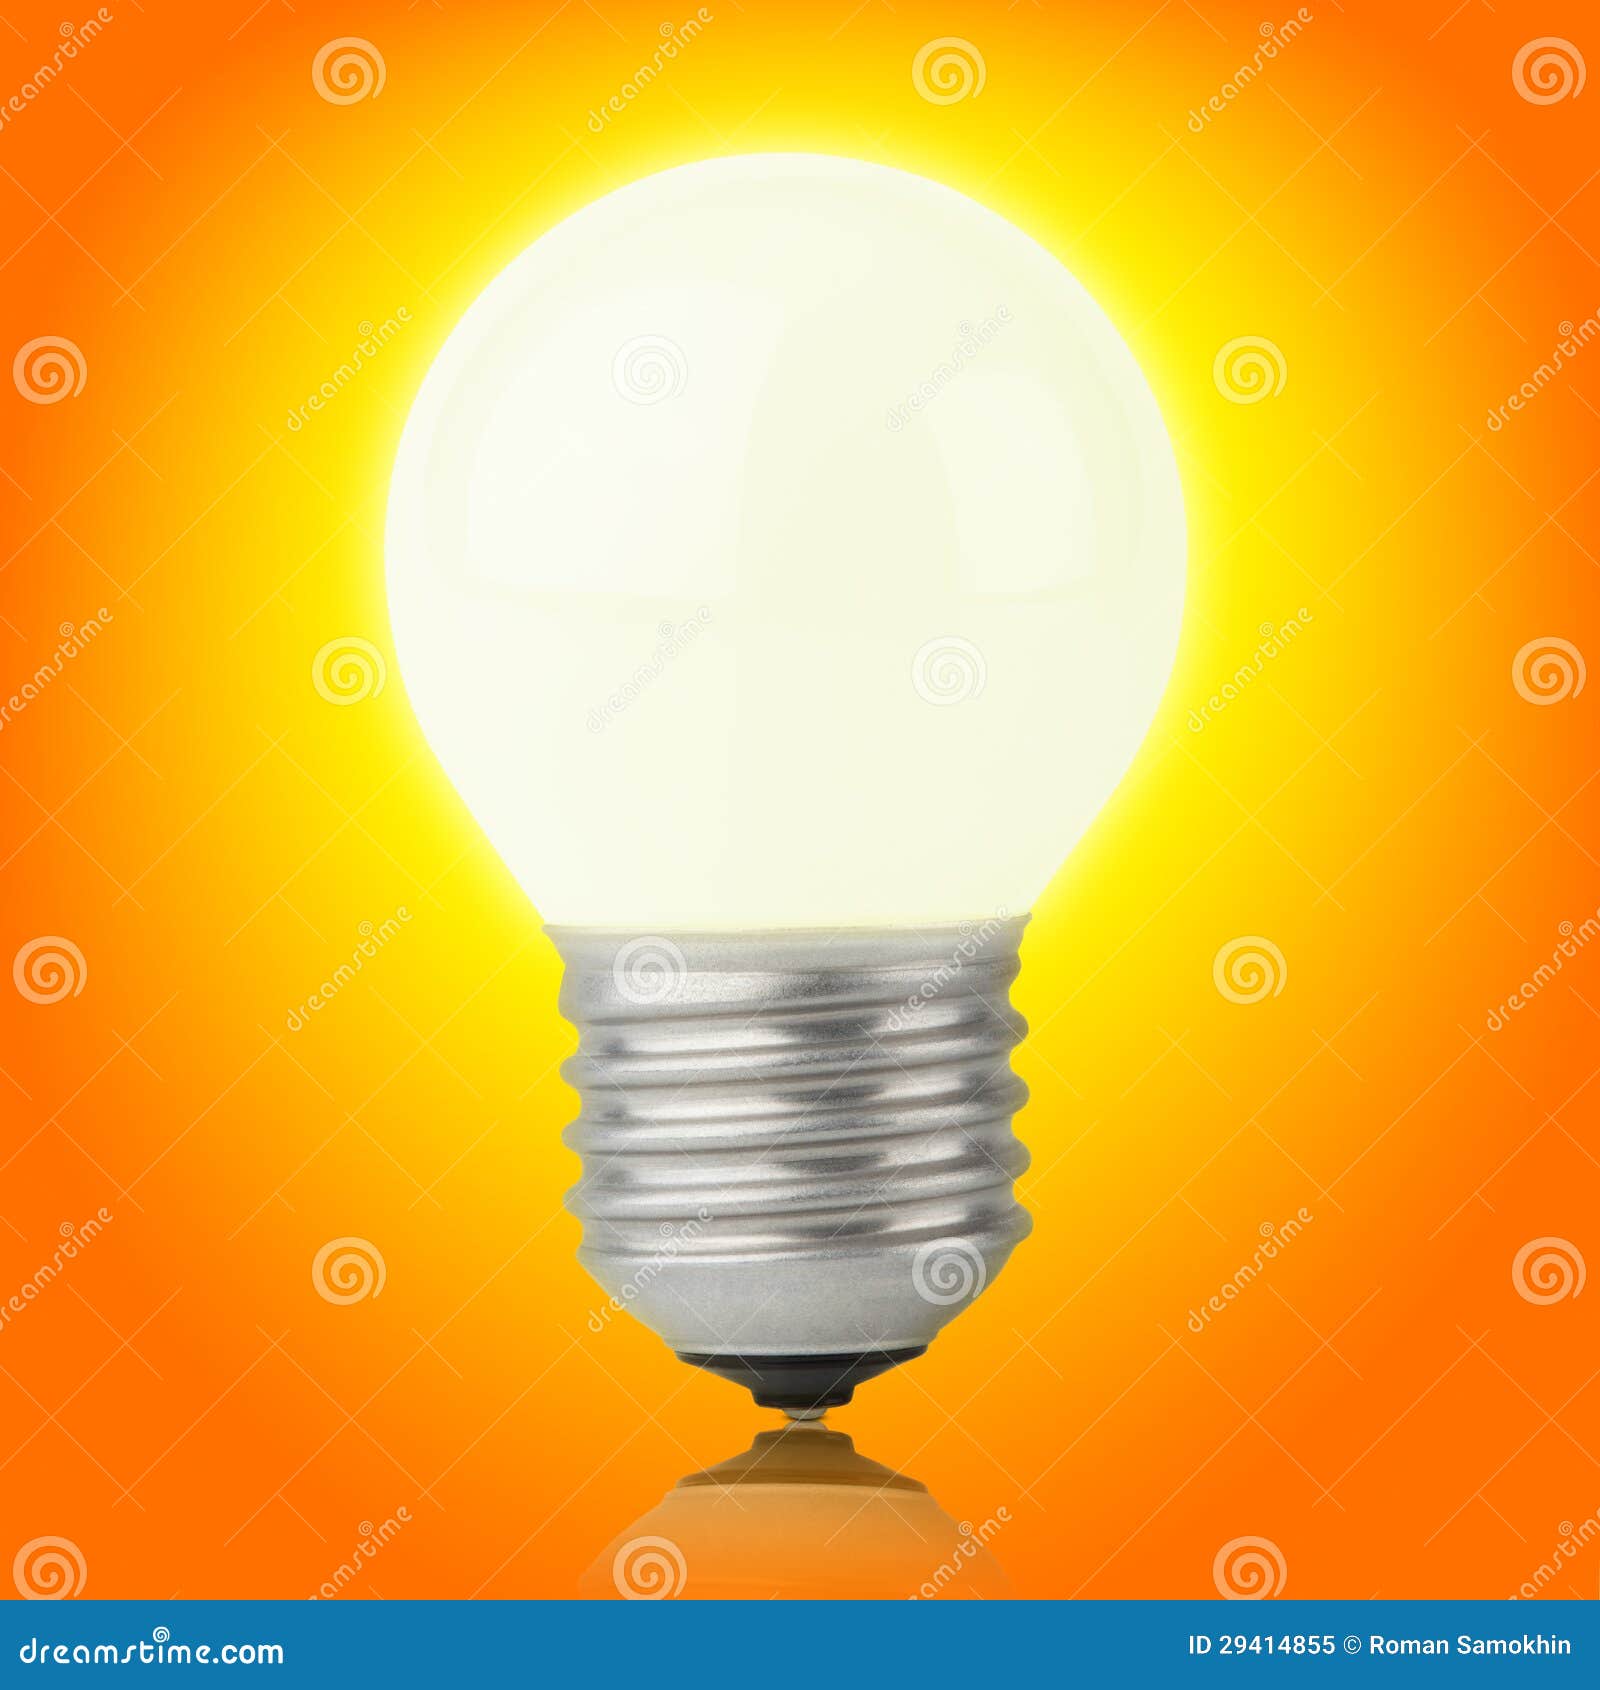 glowing incandescent light bulb on yellow-orange